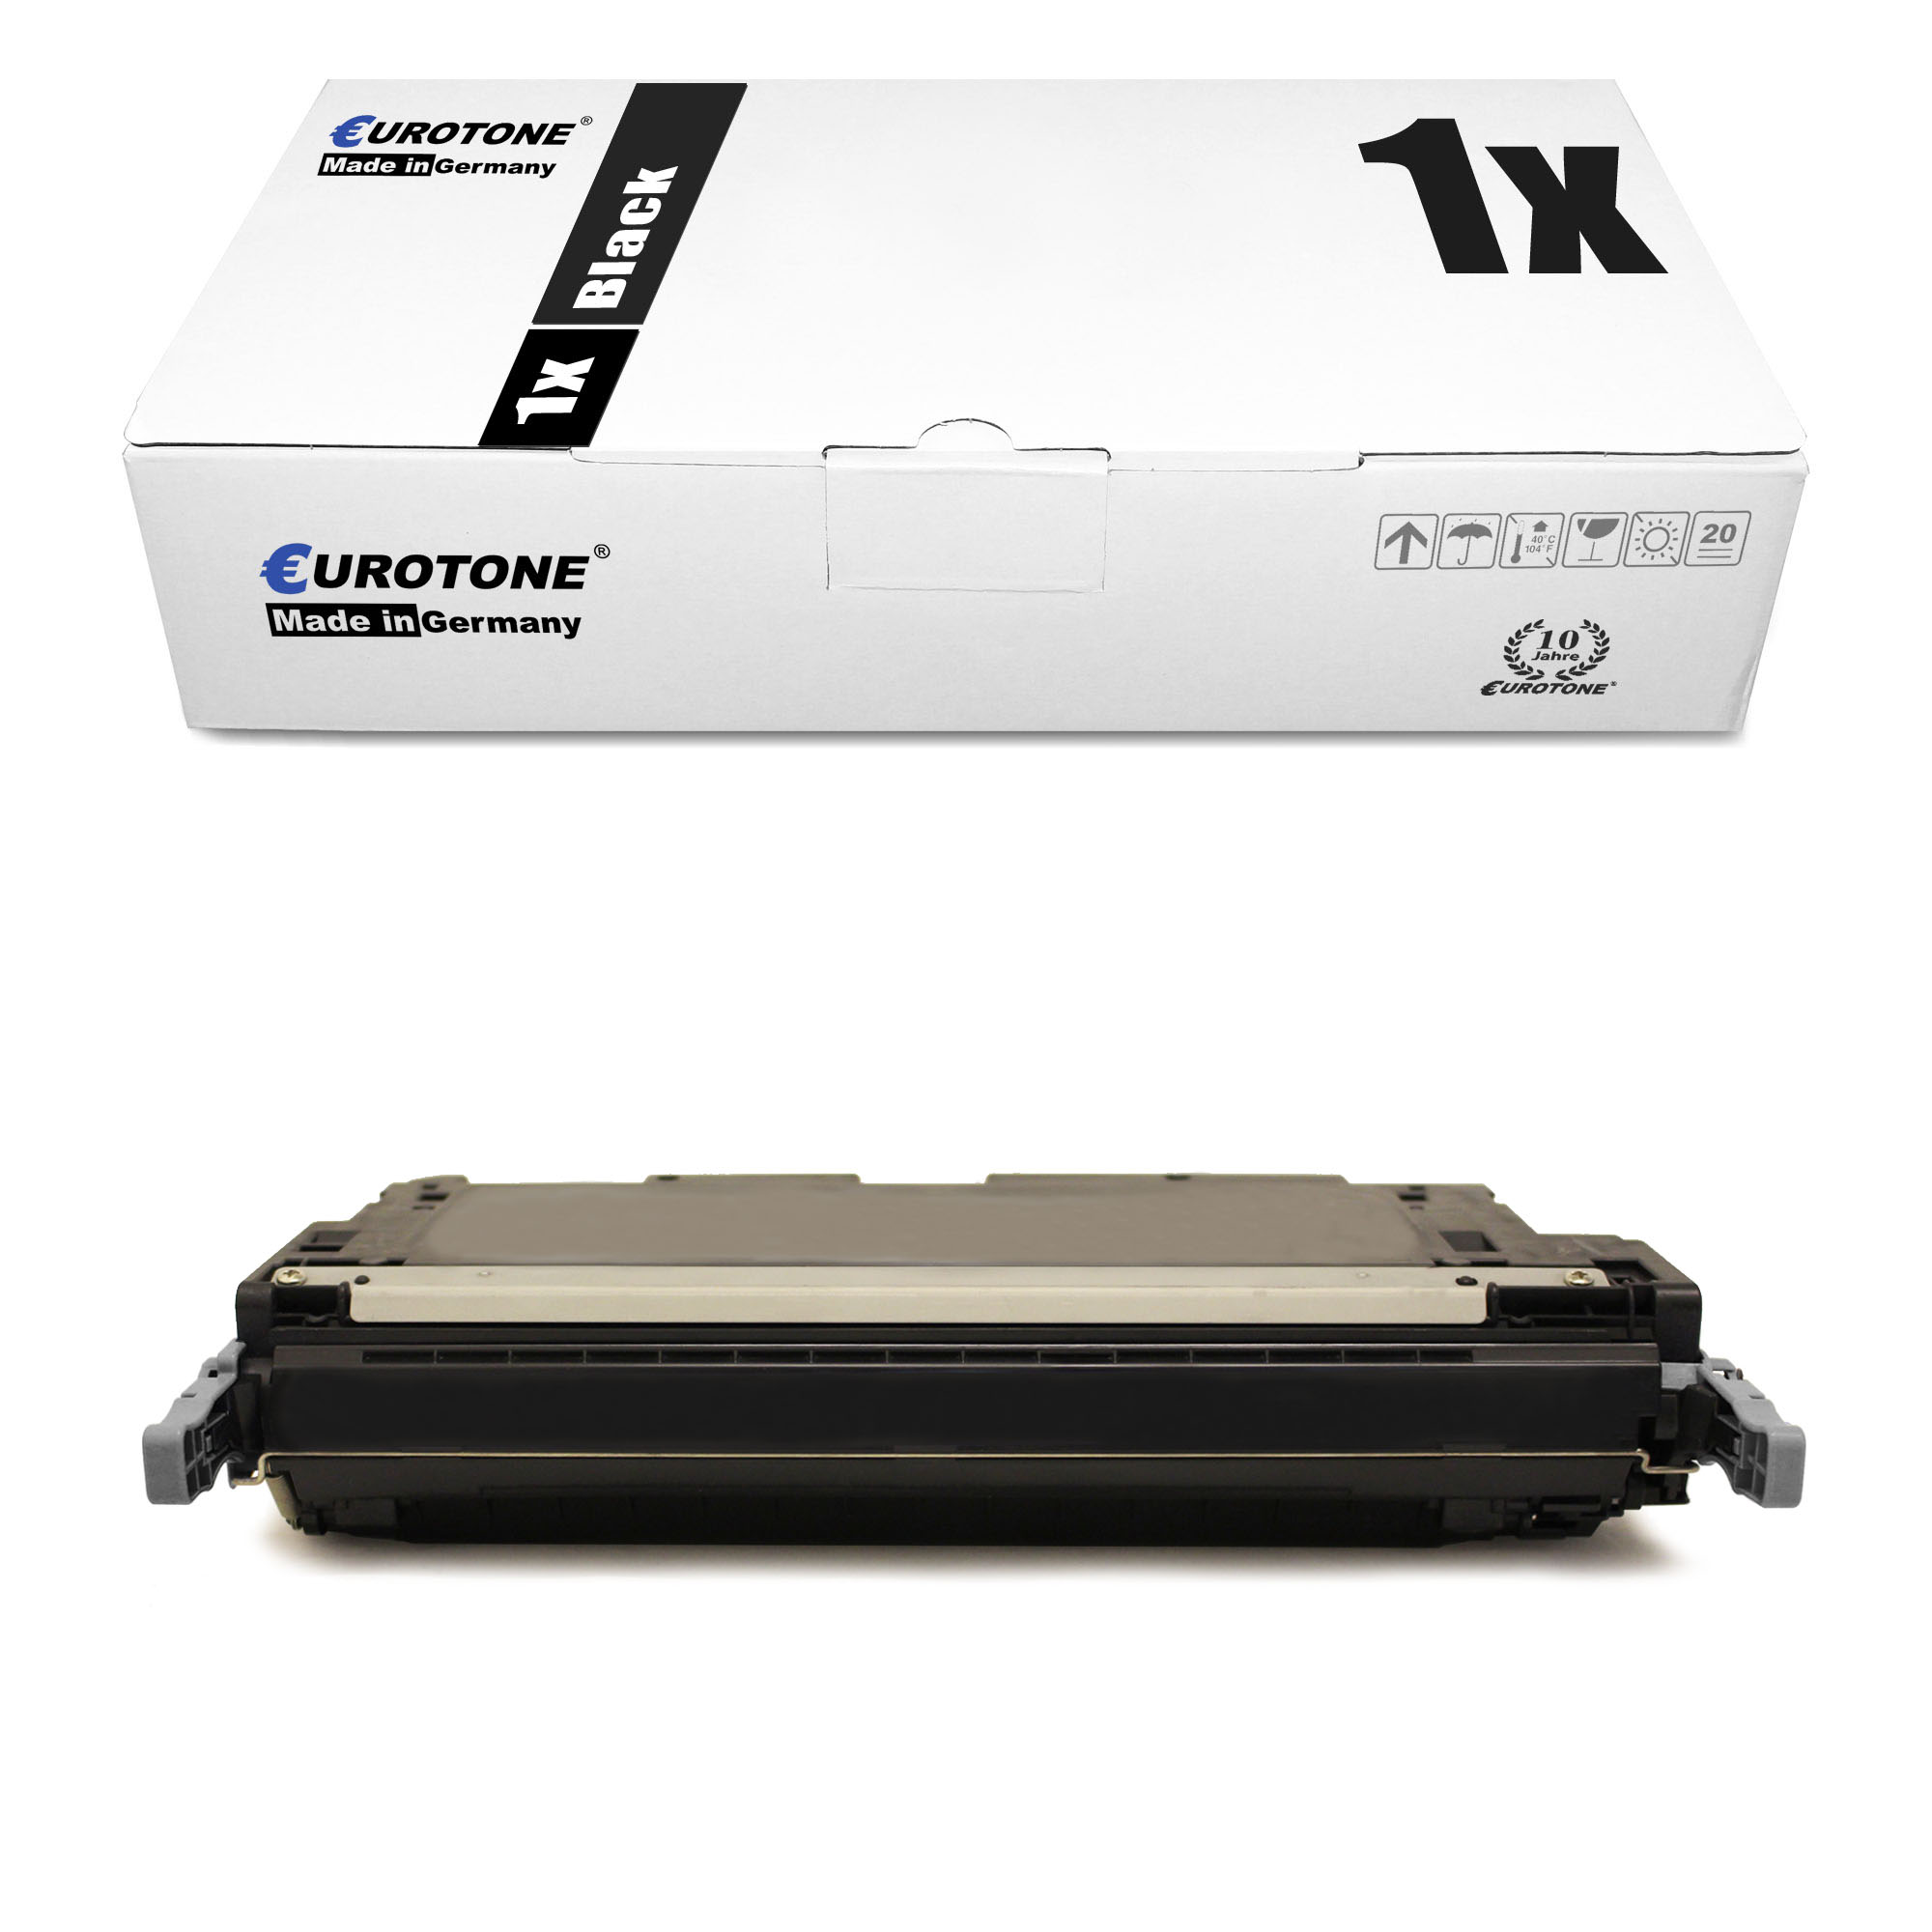 Cartridge / Schwarz 645A) C9730A ersetzt 645A / Toner HP EUROTONE (C9730A